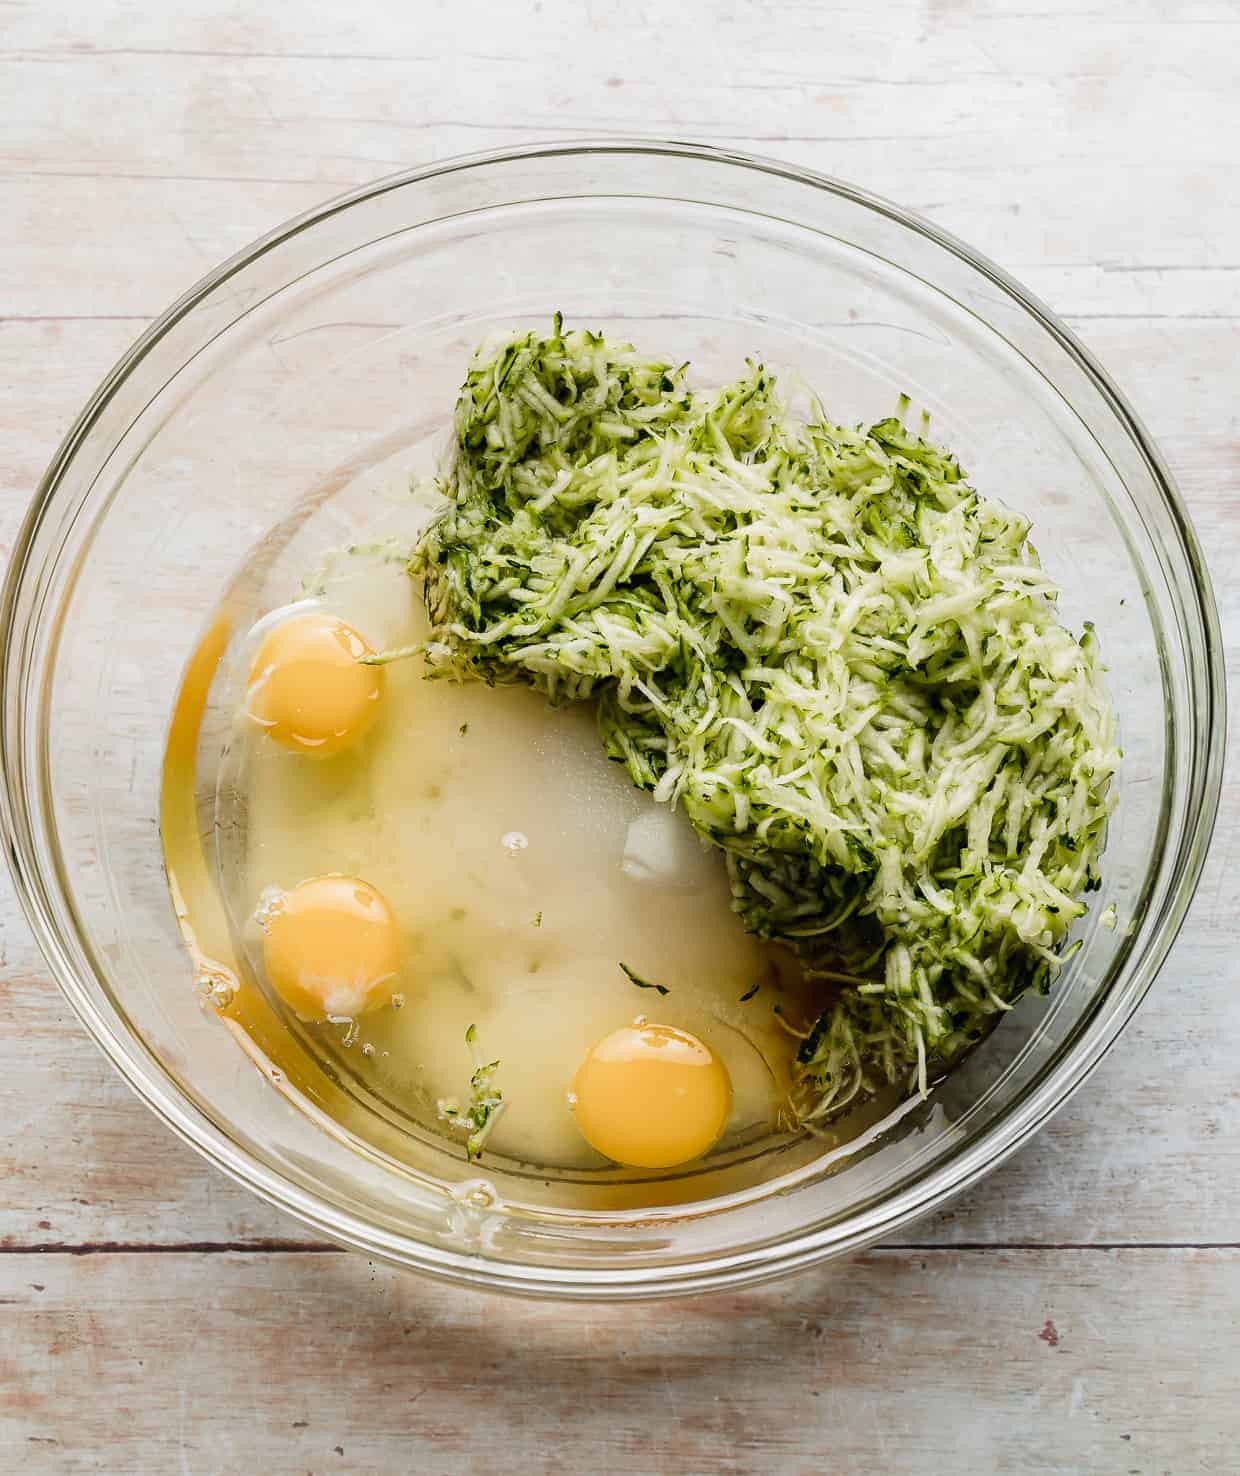 Shredded zucchini, eggs, sugar, and vanilla in a glass bowl.